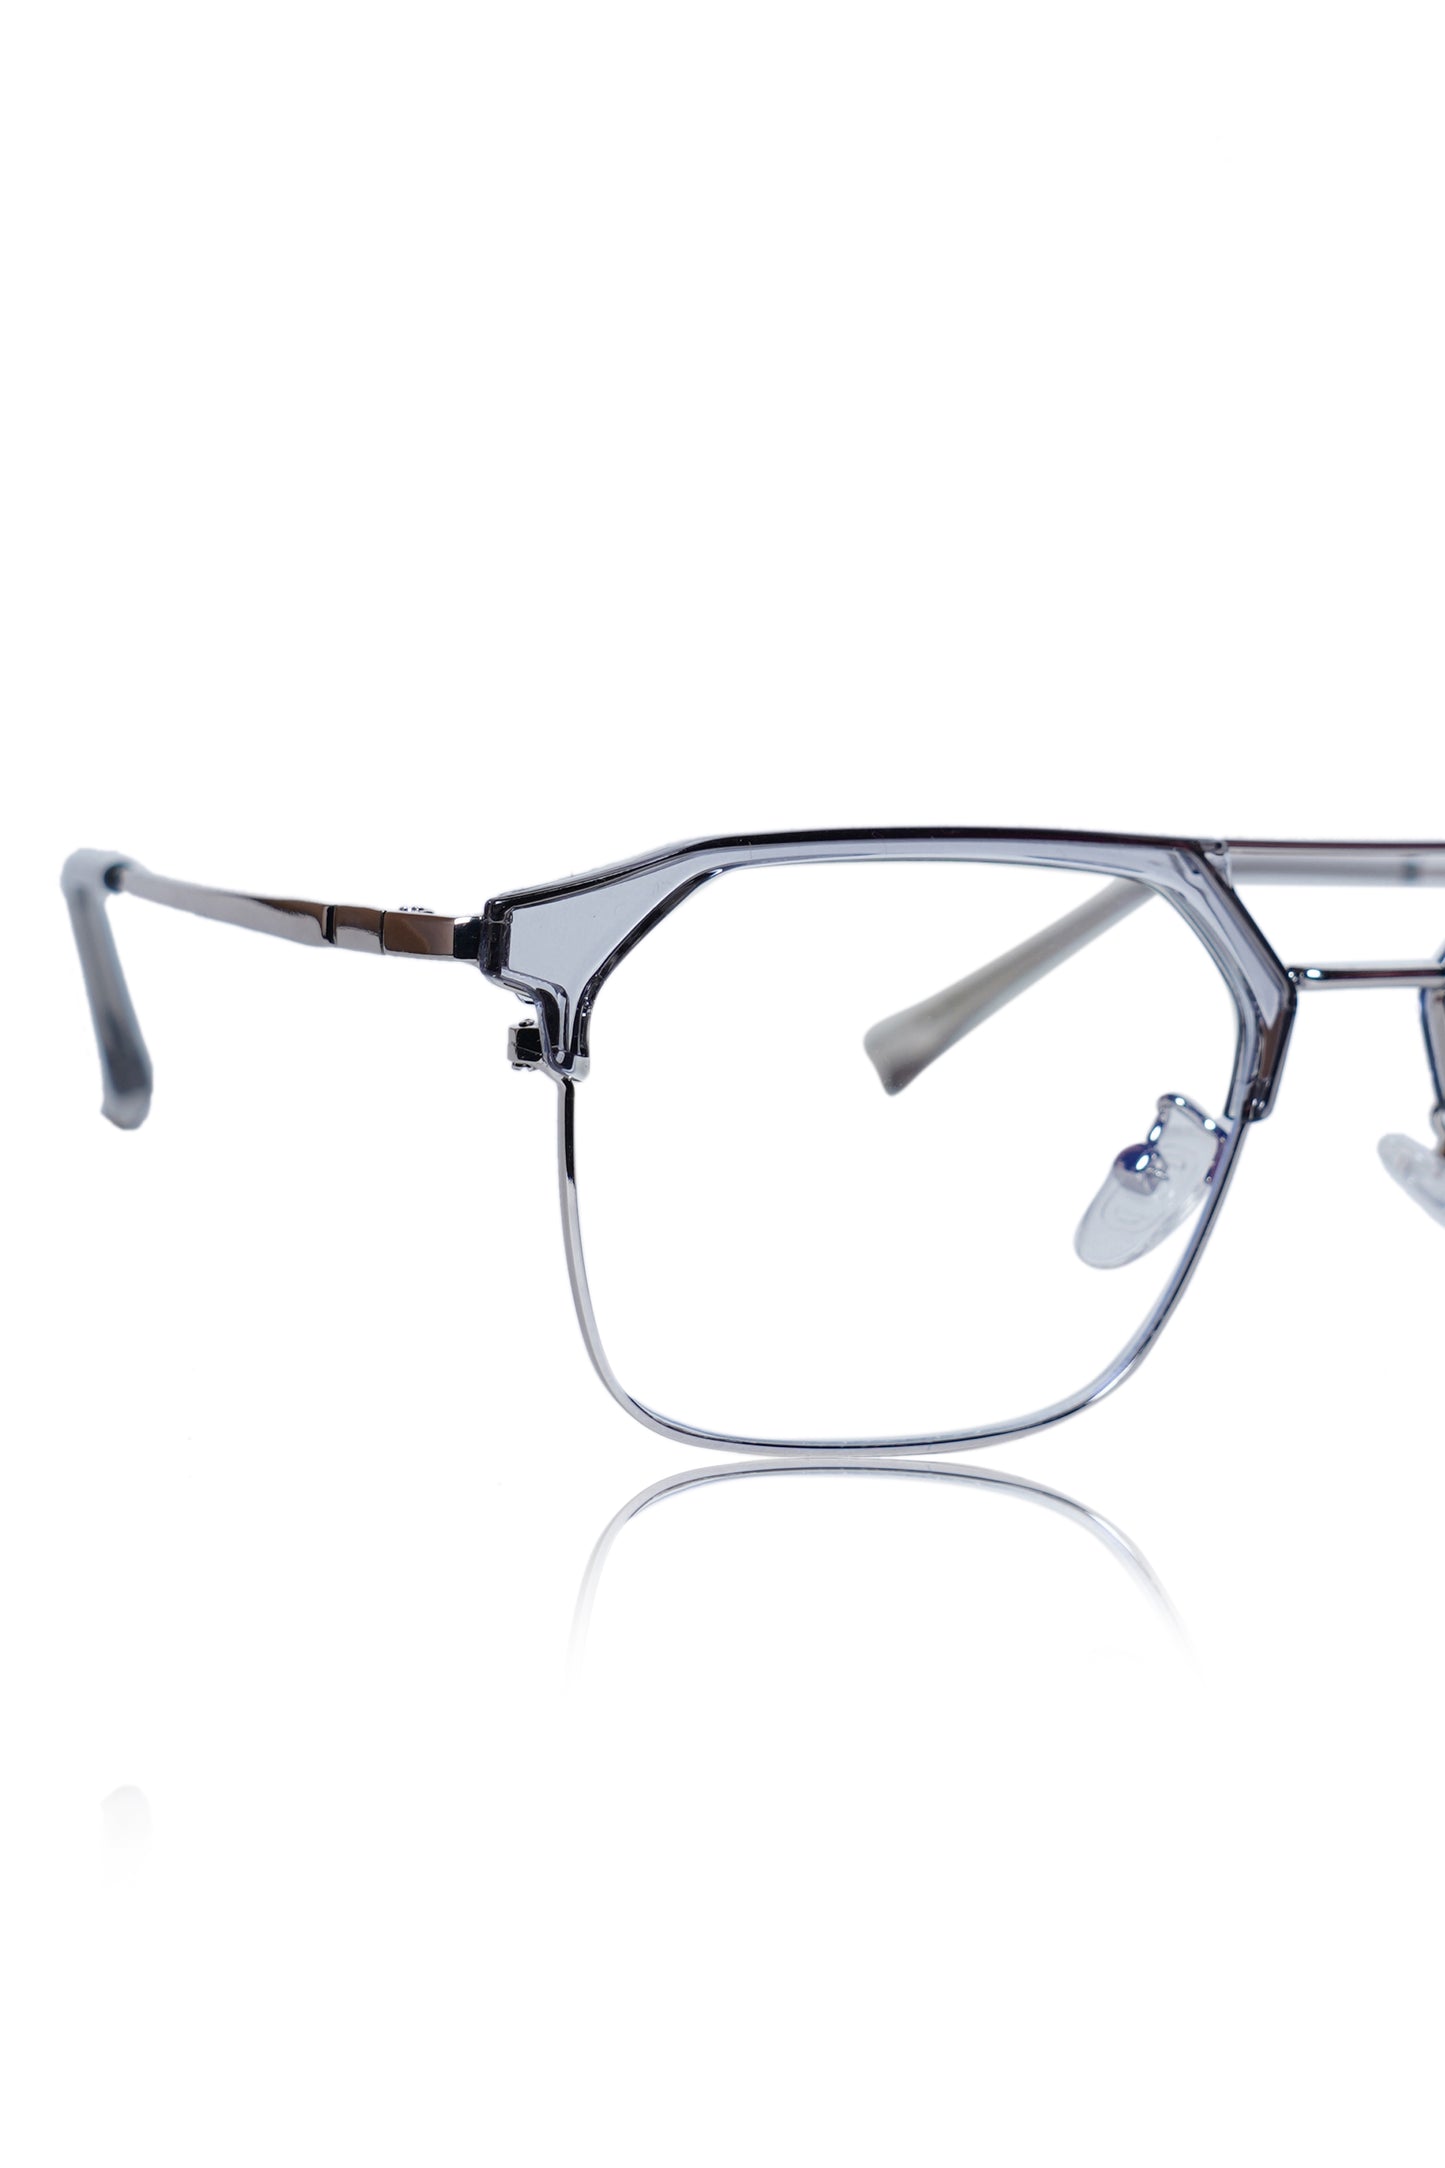 Jodykoes® Premium Series Classic Vintage Eyewear Eyeglasses Spectacles with Blue Light Anti Glare Glasses Frame for Men and Women (Transparent)